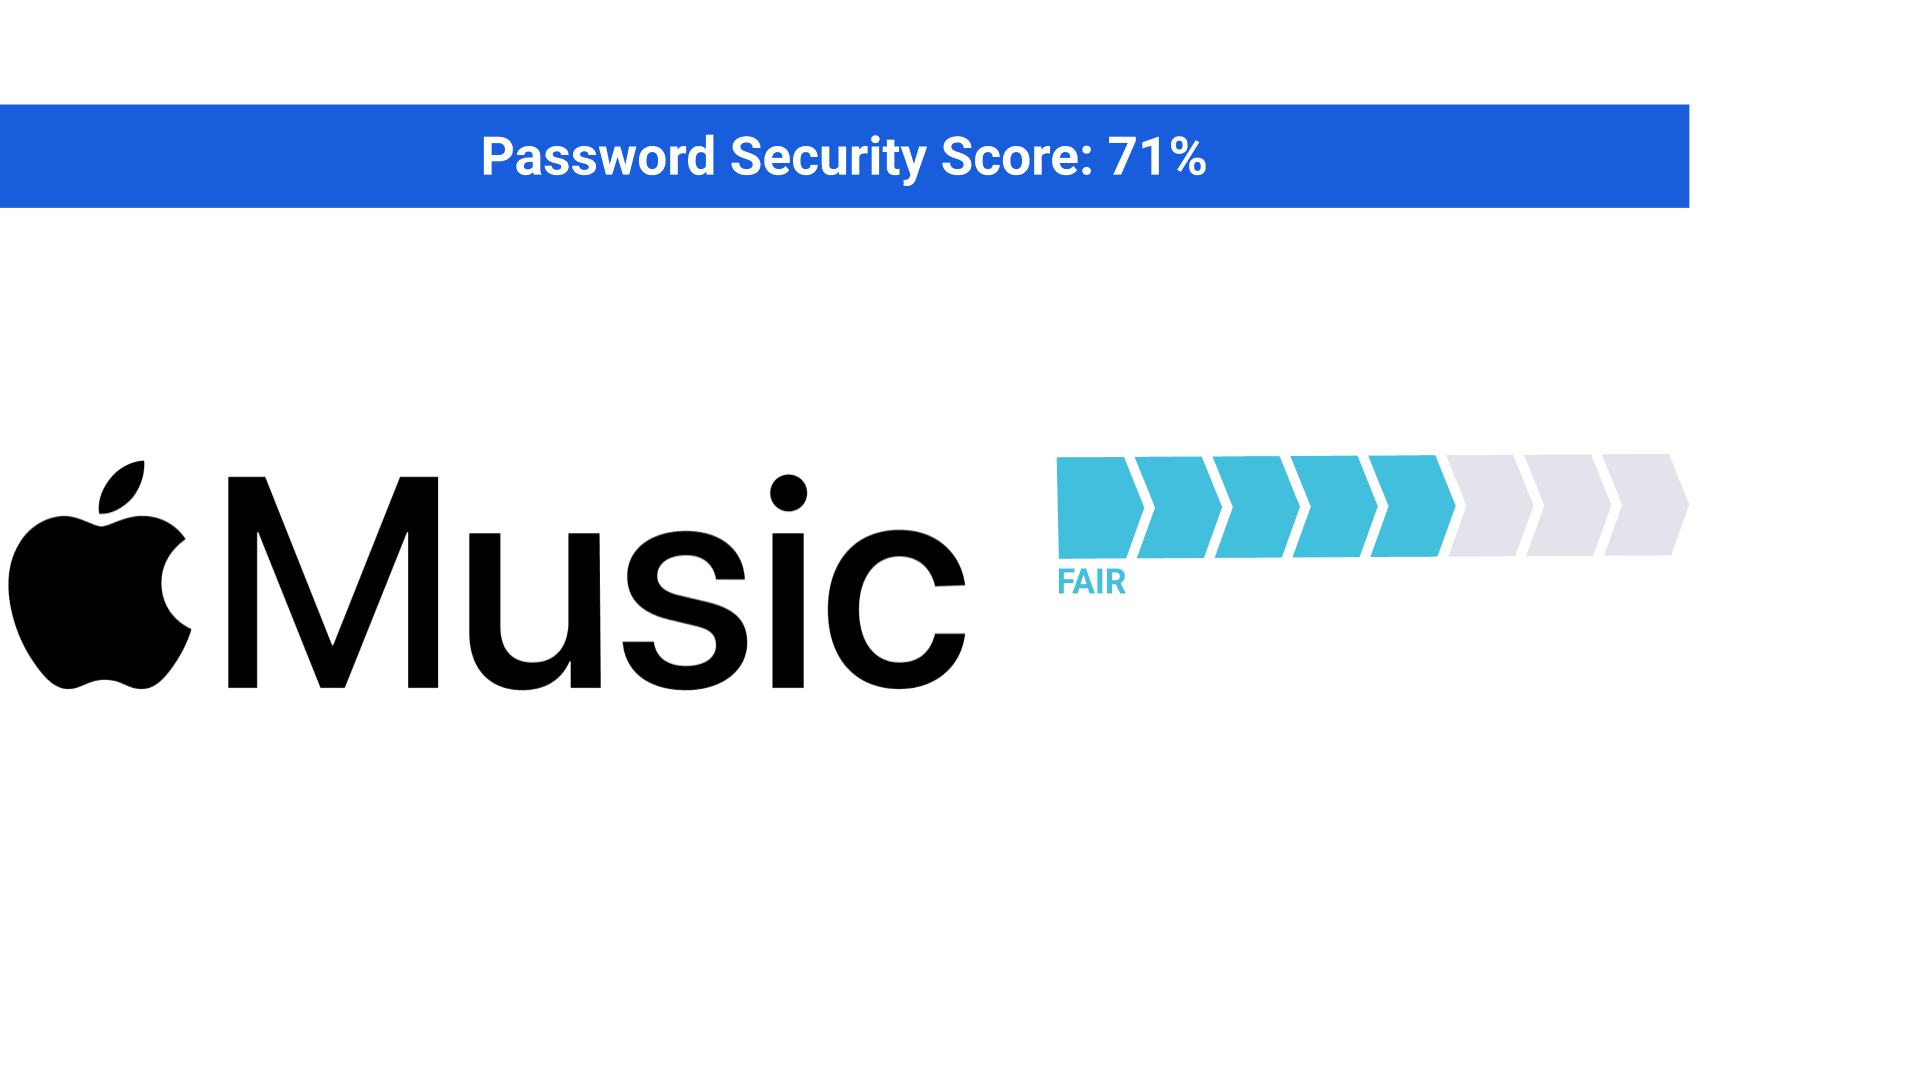 Apple Music password security score